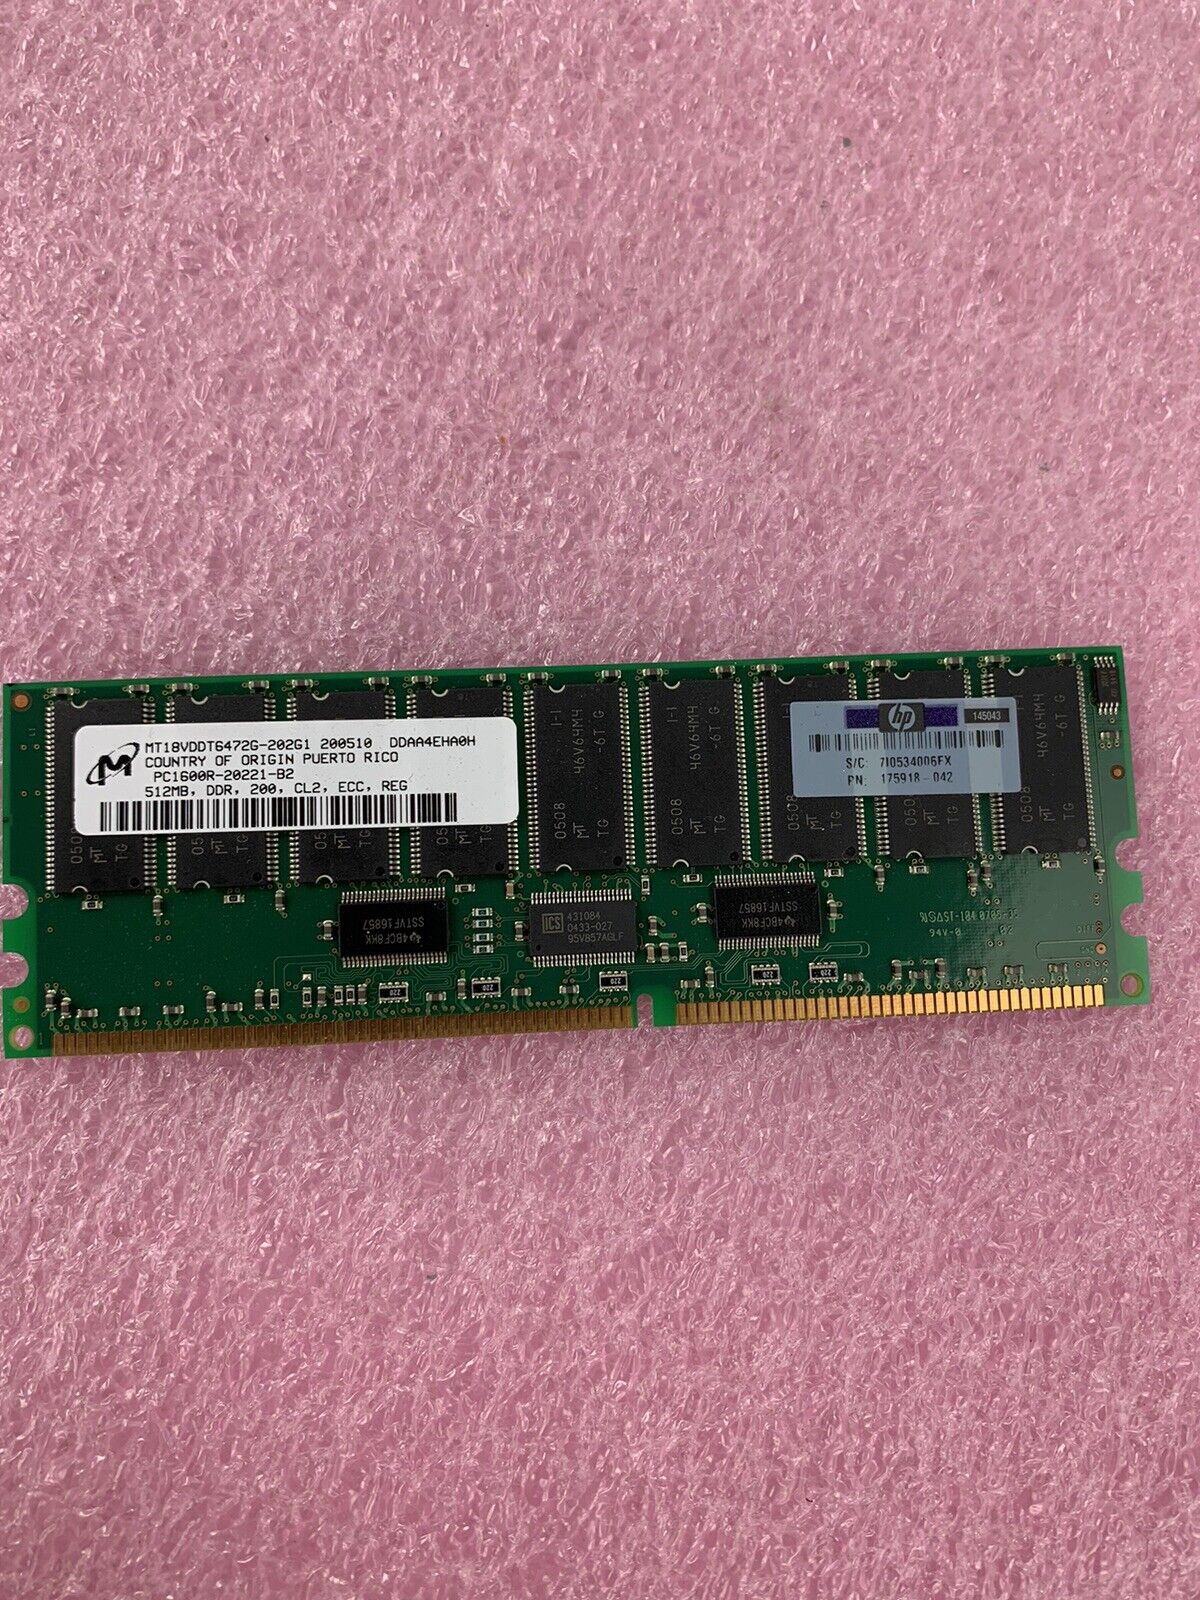 Micron MT18VDDT6472G-202G1 PC1600R-20221-B2 512MB DDR Server Memory RAM